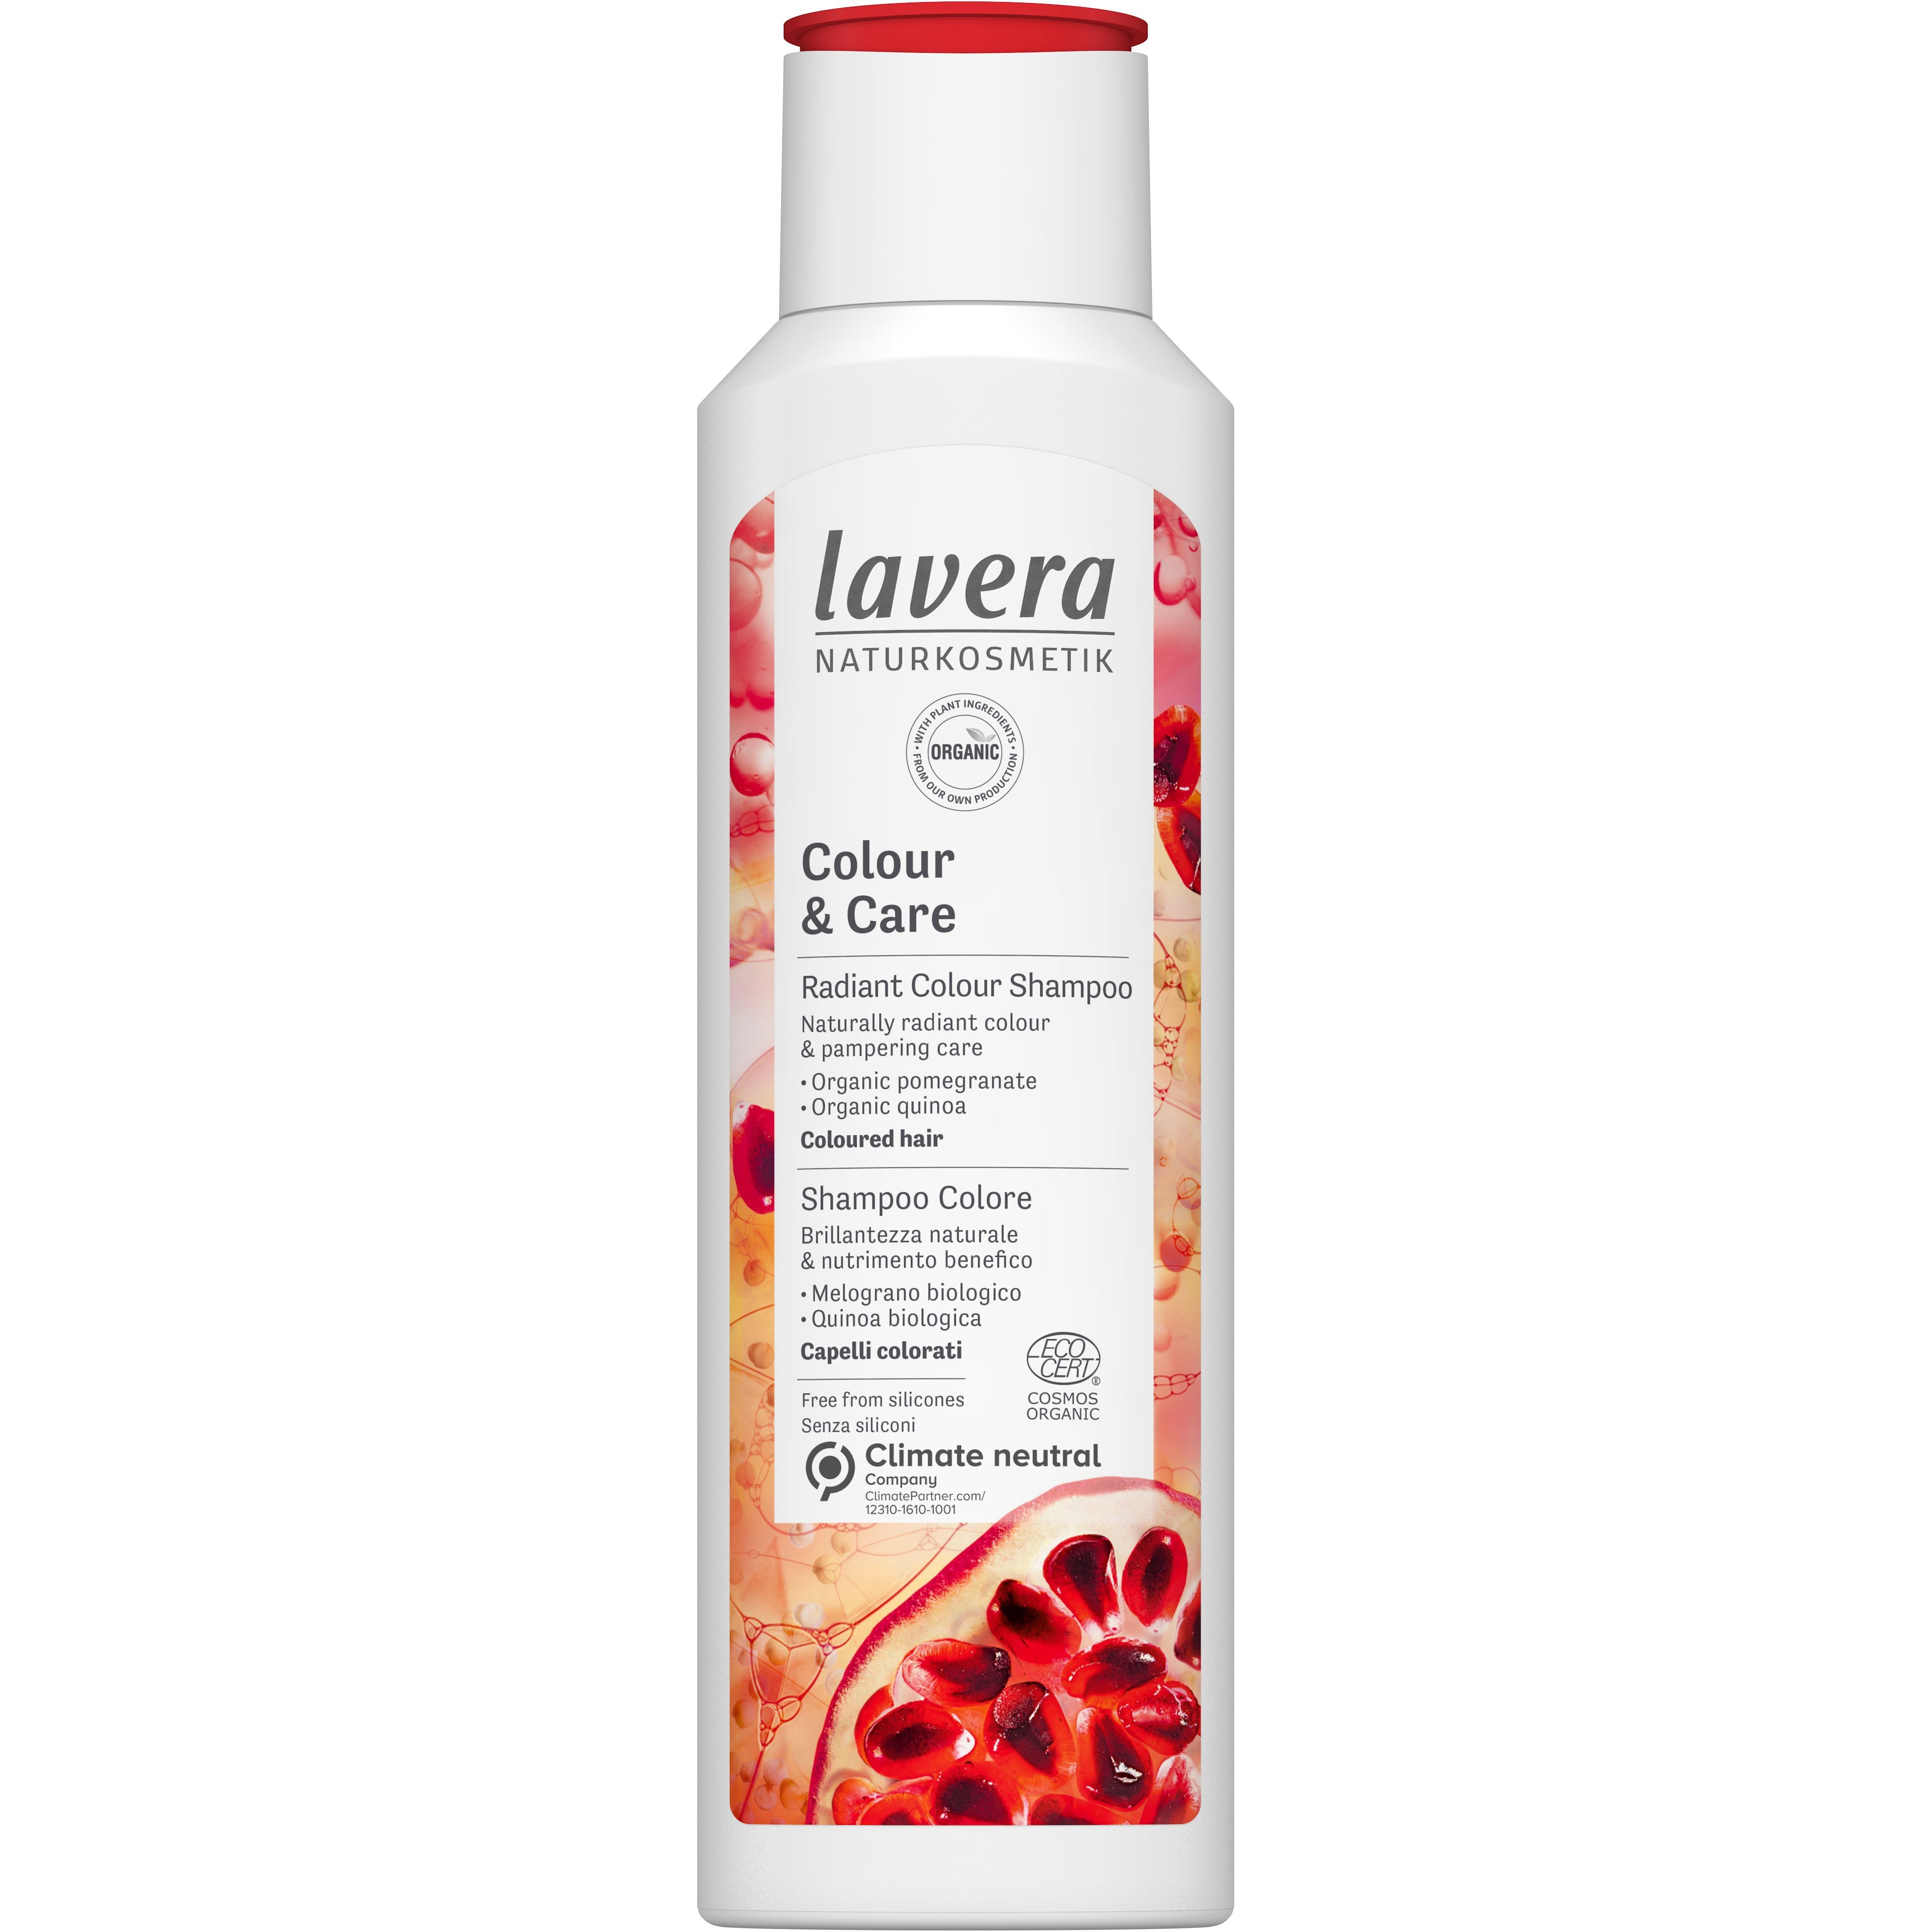 Lavera Colour & Care shampoo